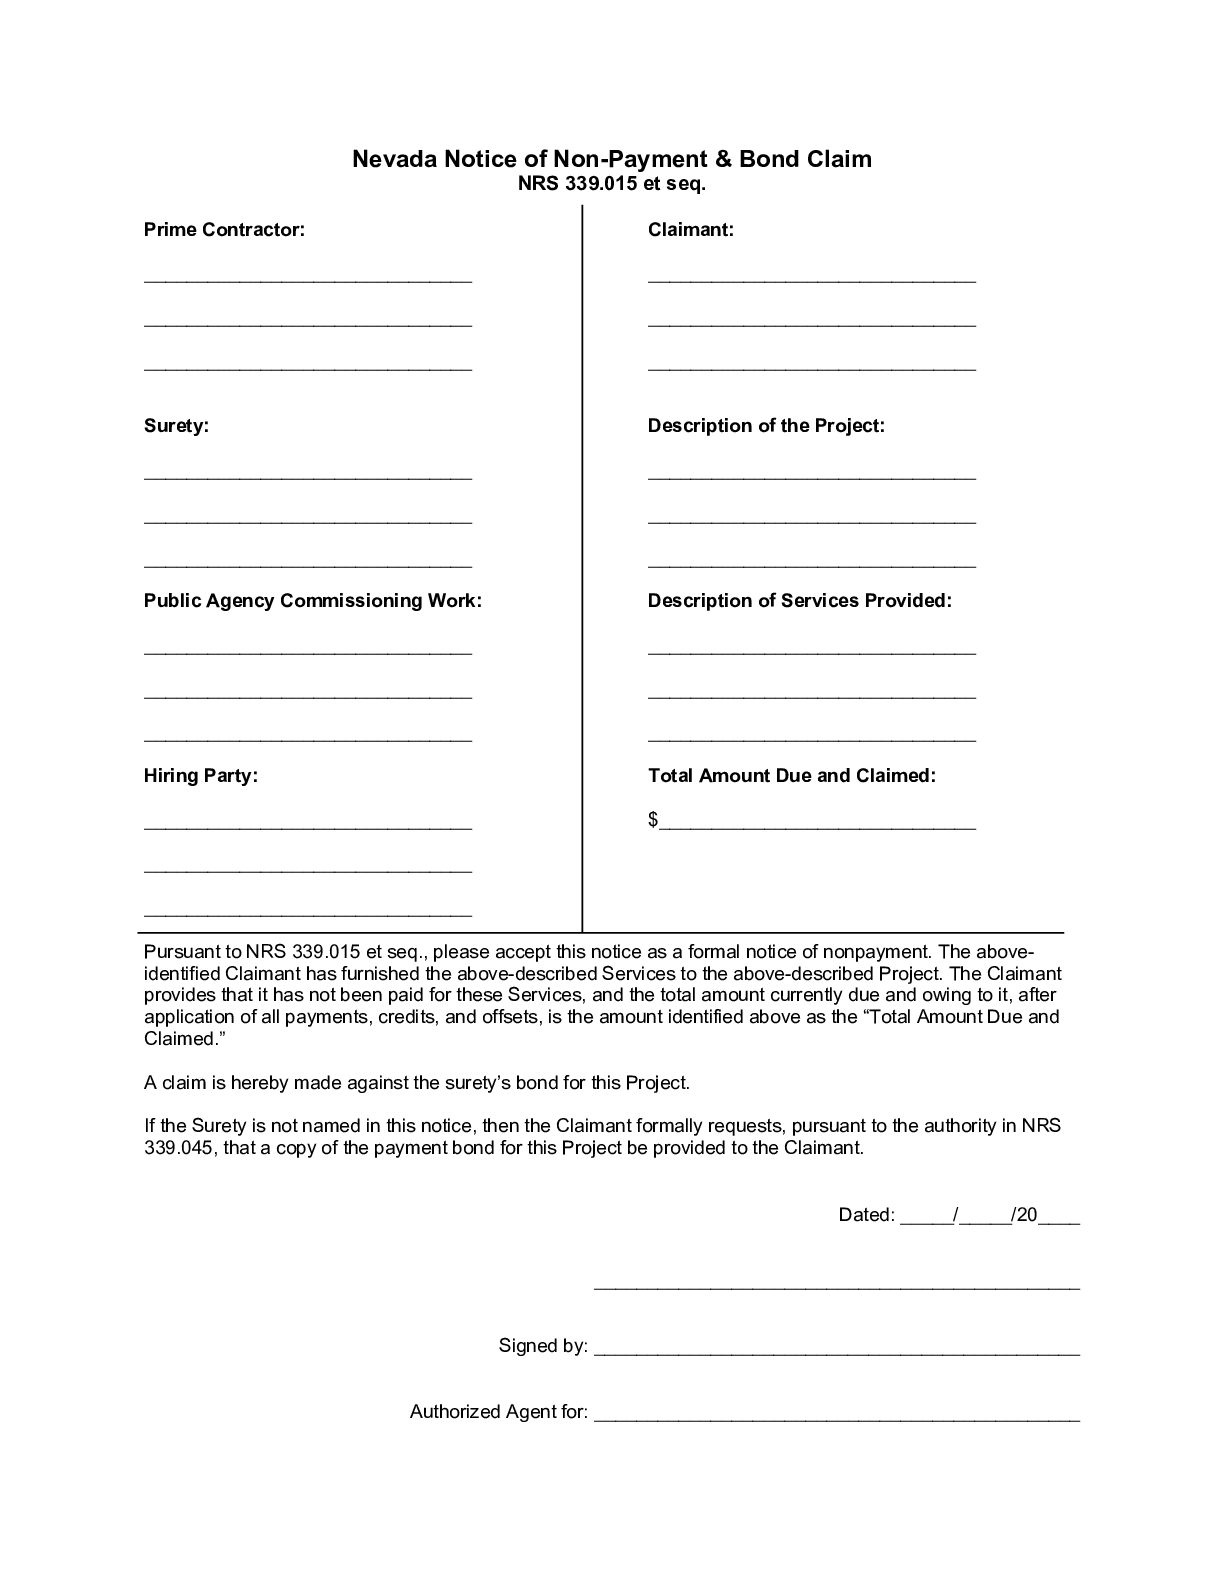 Nevada Bond Claim Form | Free Download